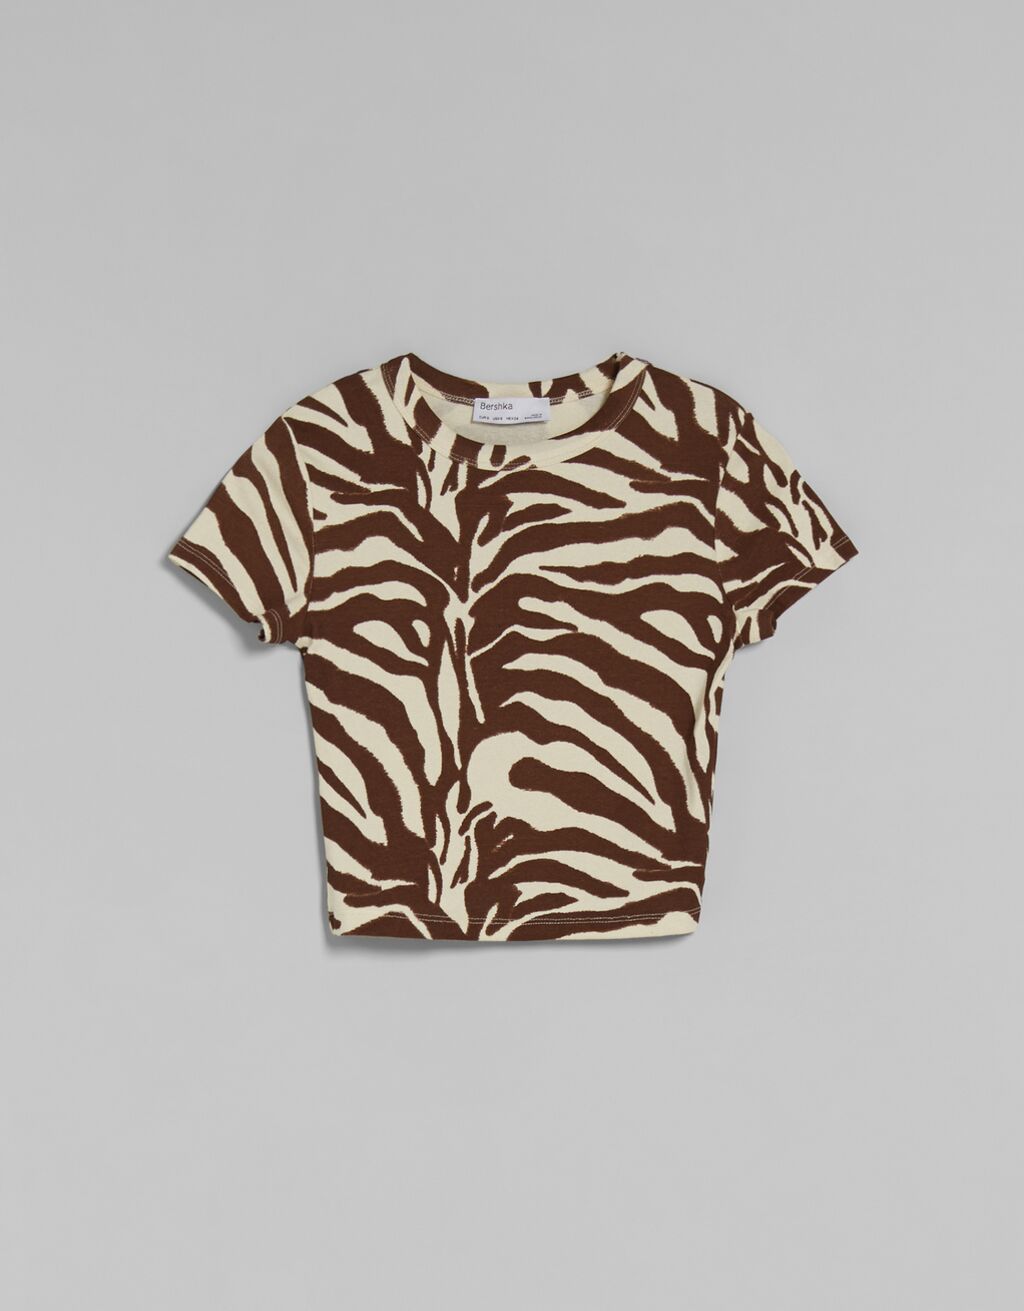 Short sleeve T-shirt with animal print.